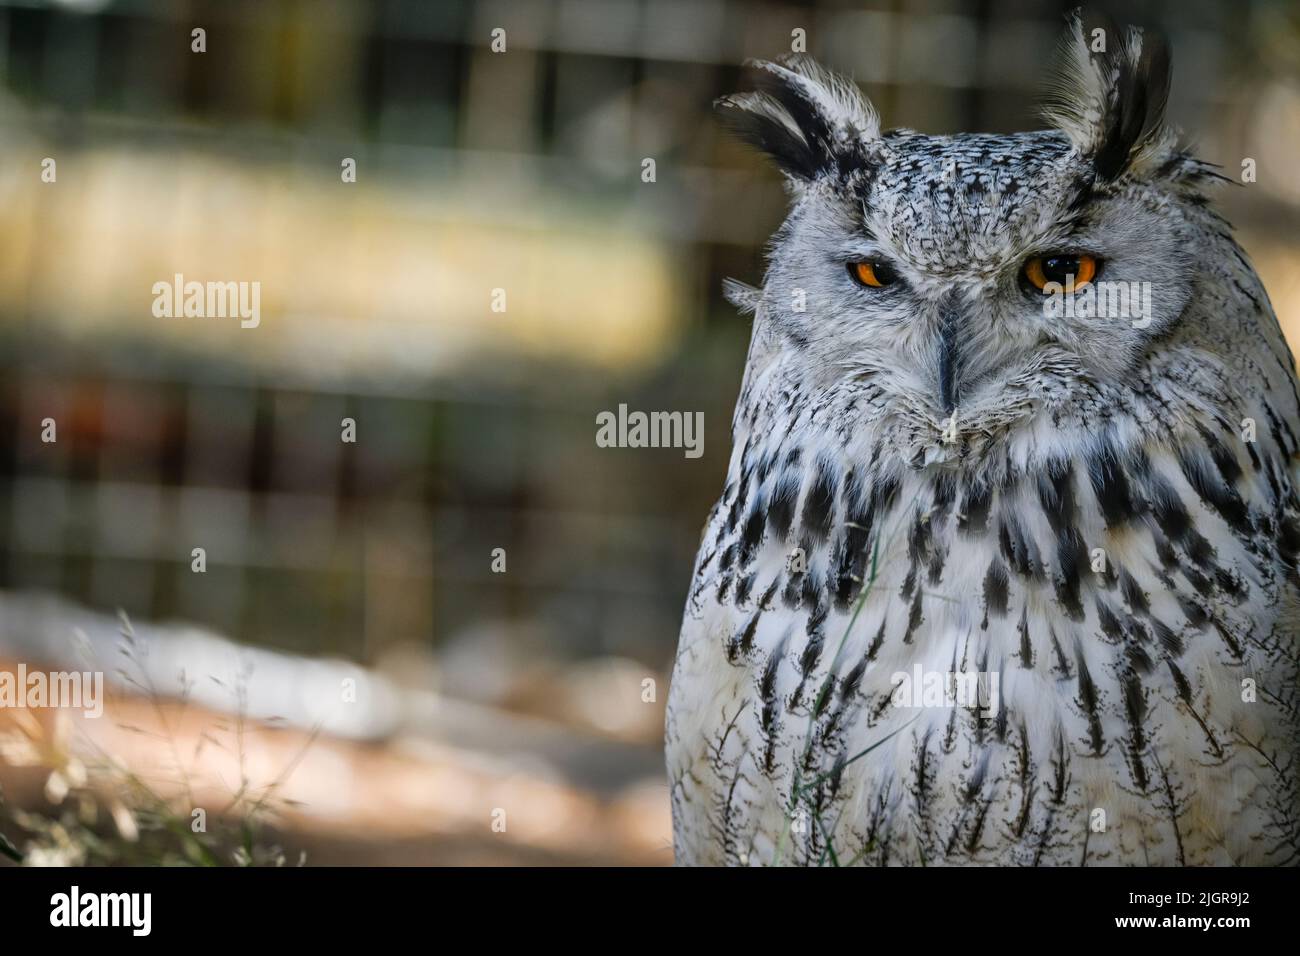 Bubo bubo Sibiricus - Siberian owl, is a species of bird Strigiformes in the family Strigidae. Stock Photo